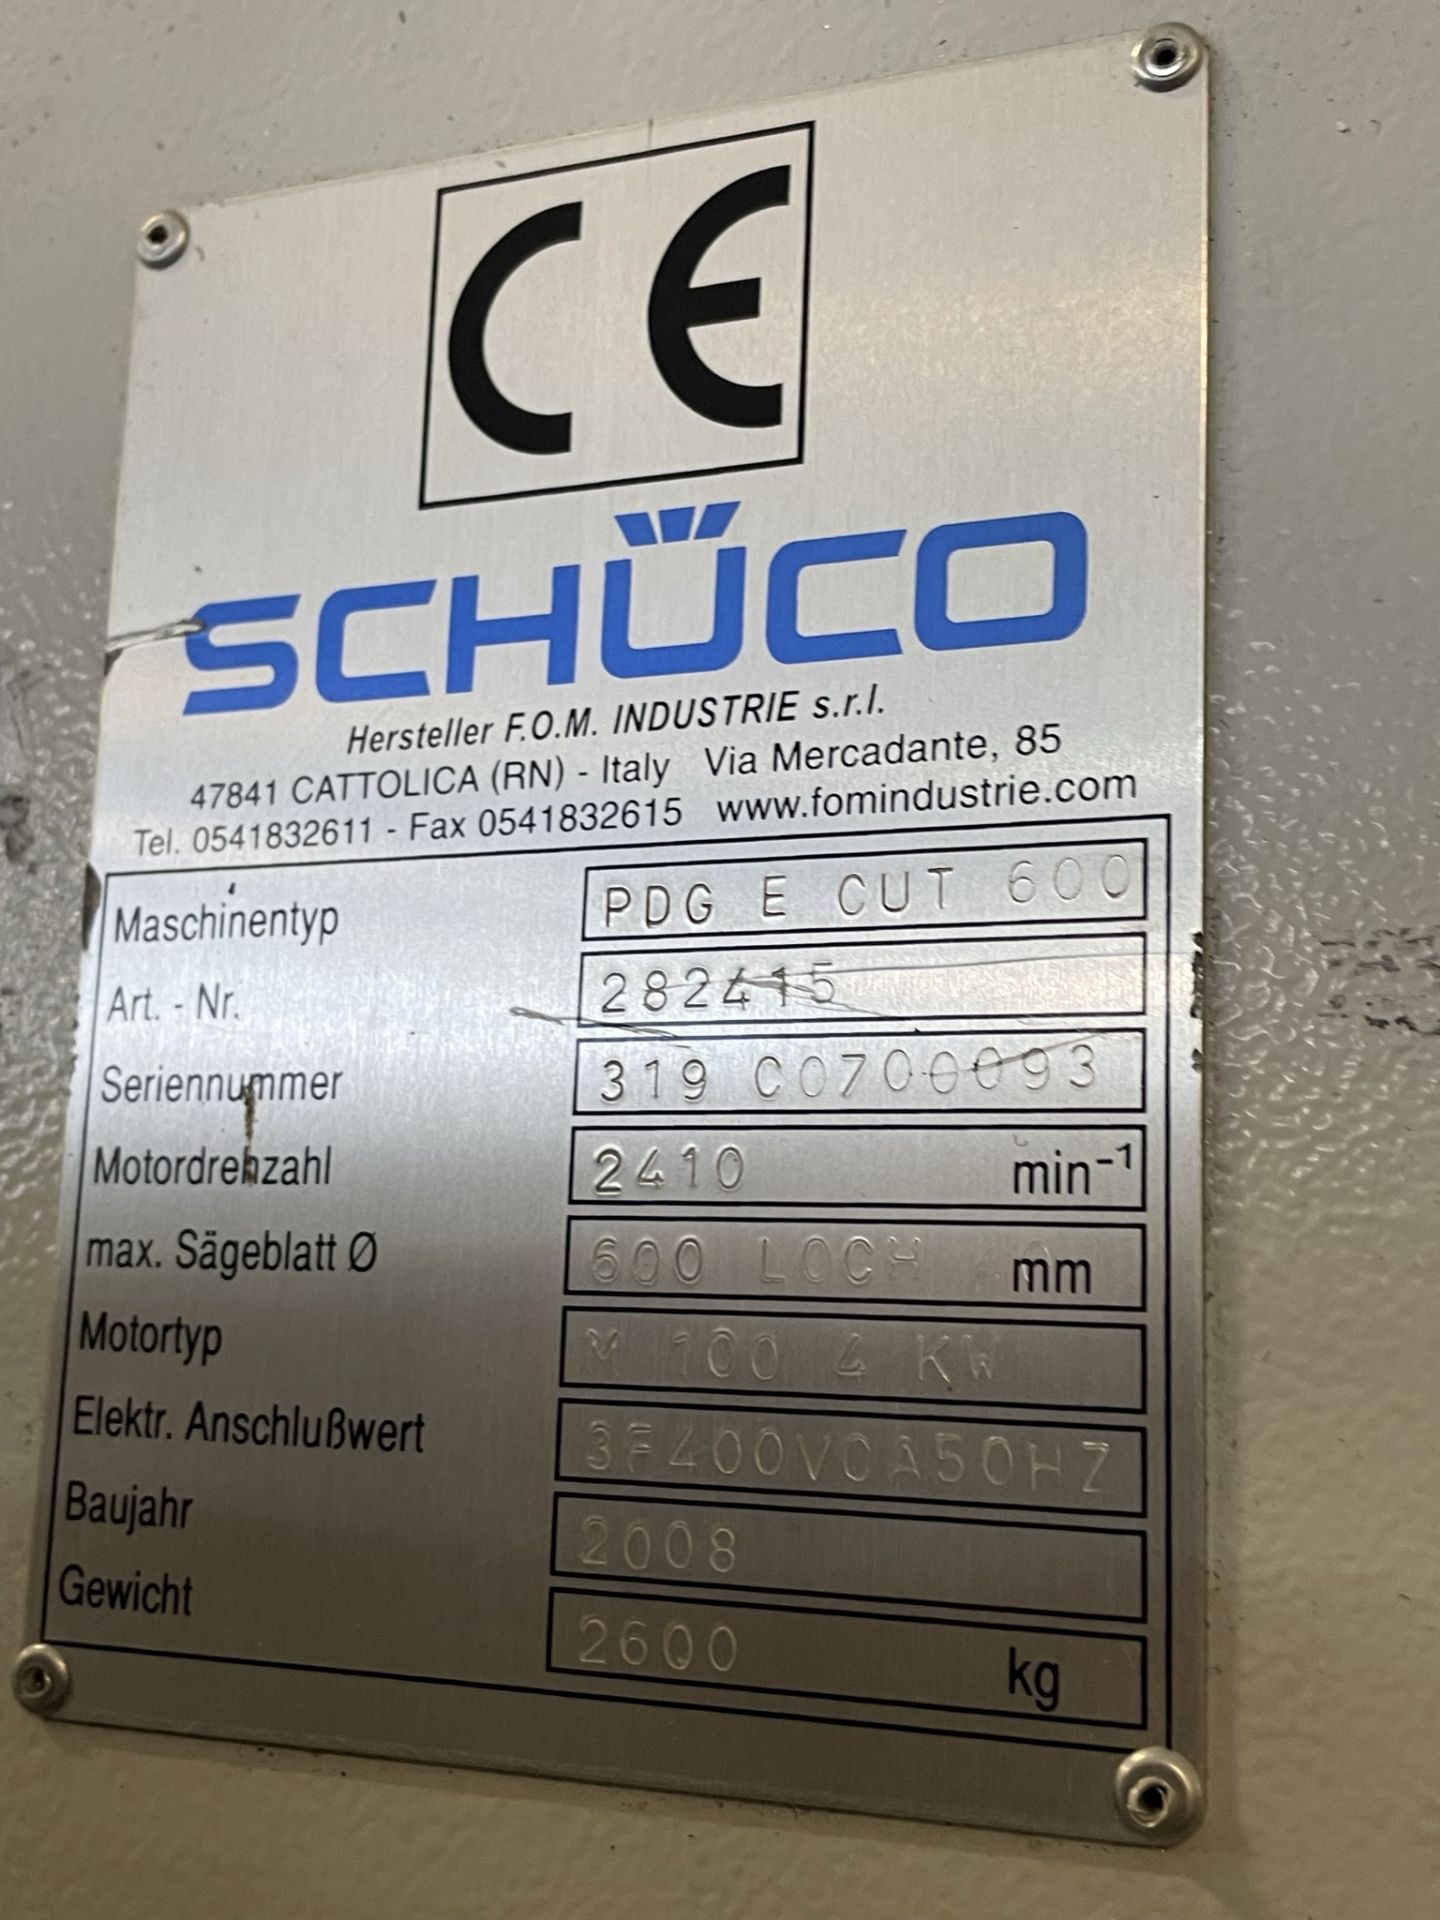 Schuco, PDG E Cut 600 CNC twin head mitre saw, Serial No. 319C0700093 (DOM: 2008), Bed Length: - Image 9 of 9